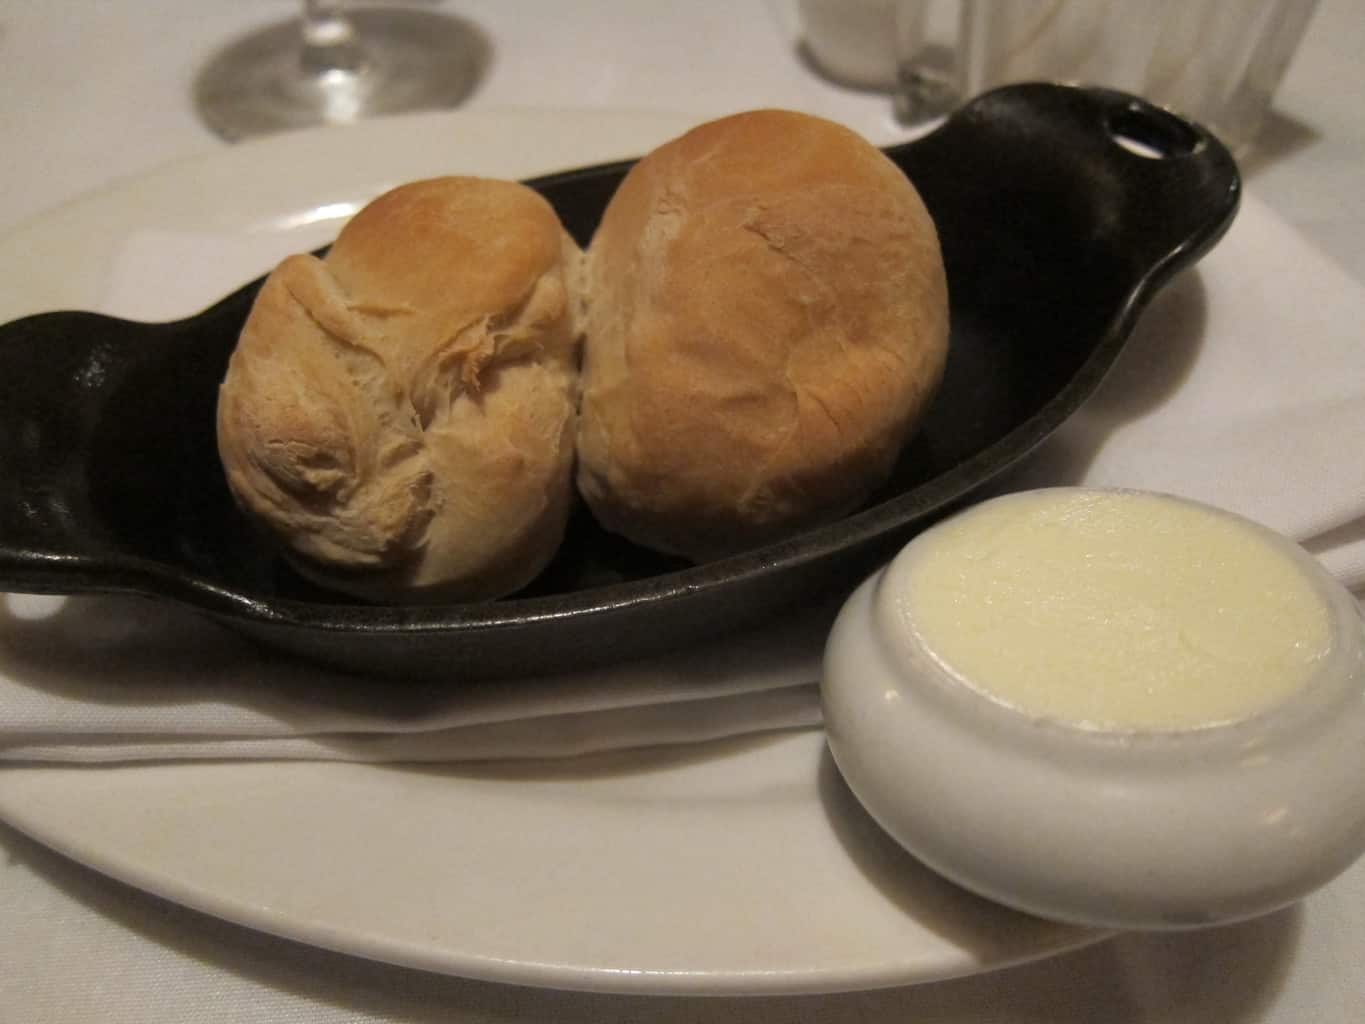 sourdough bread and butter